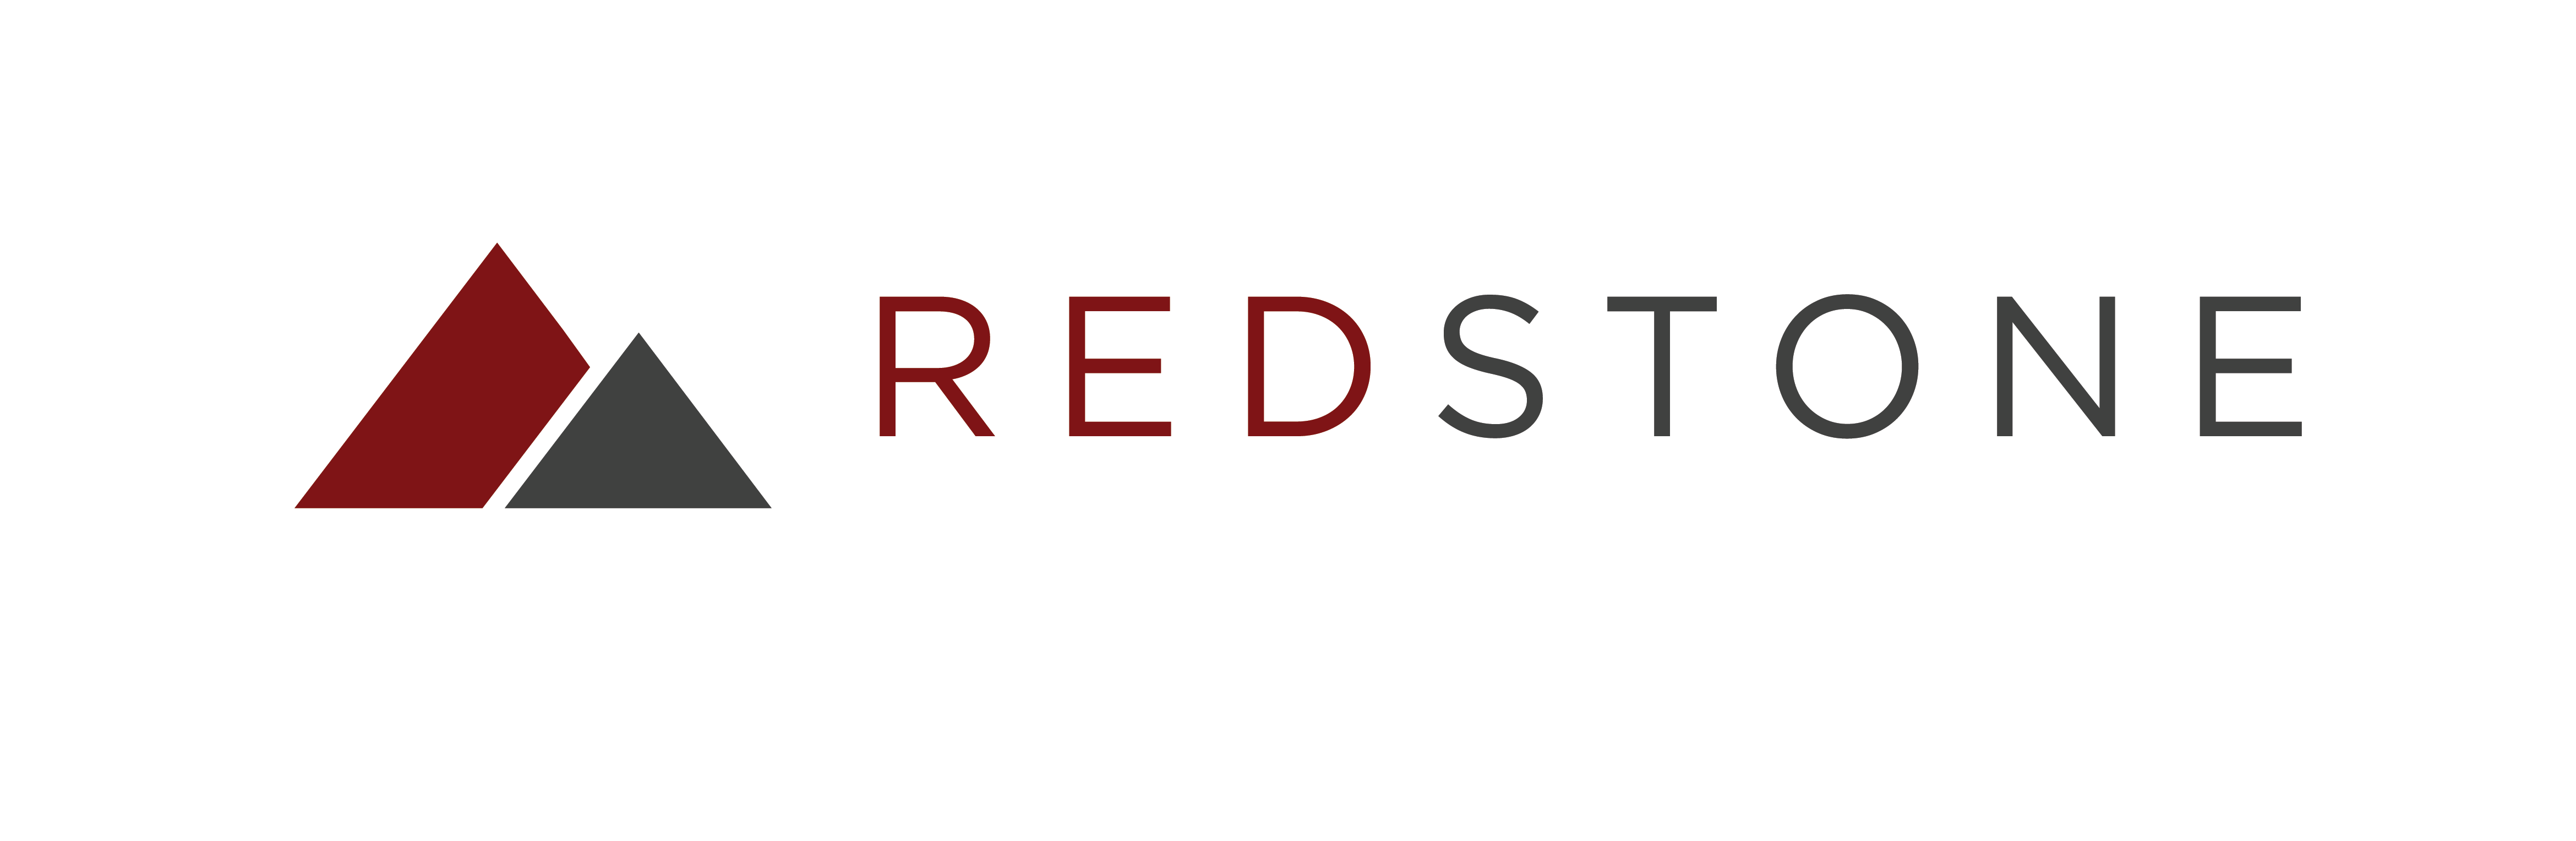 Redstone Residential Company Logo